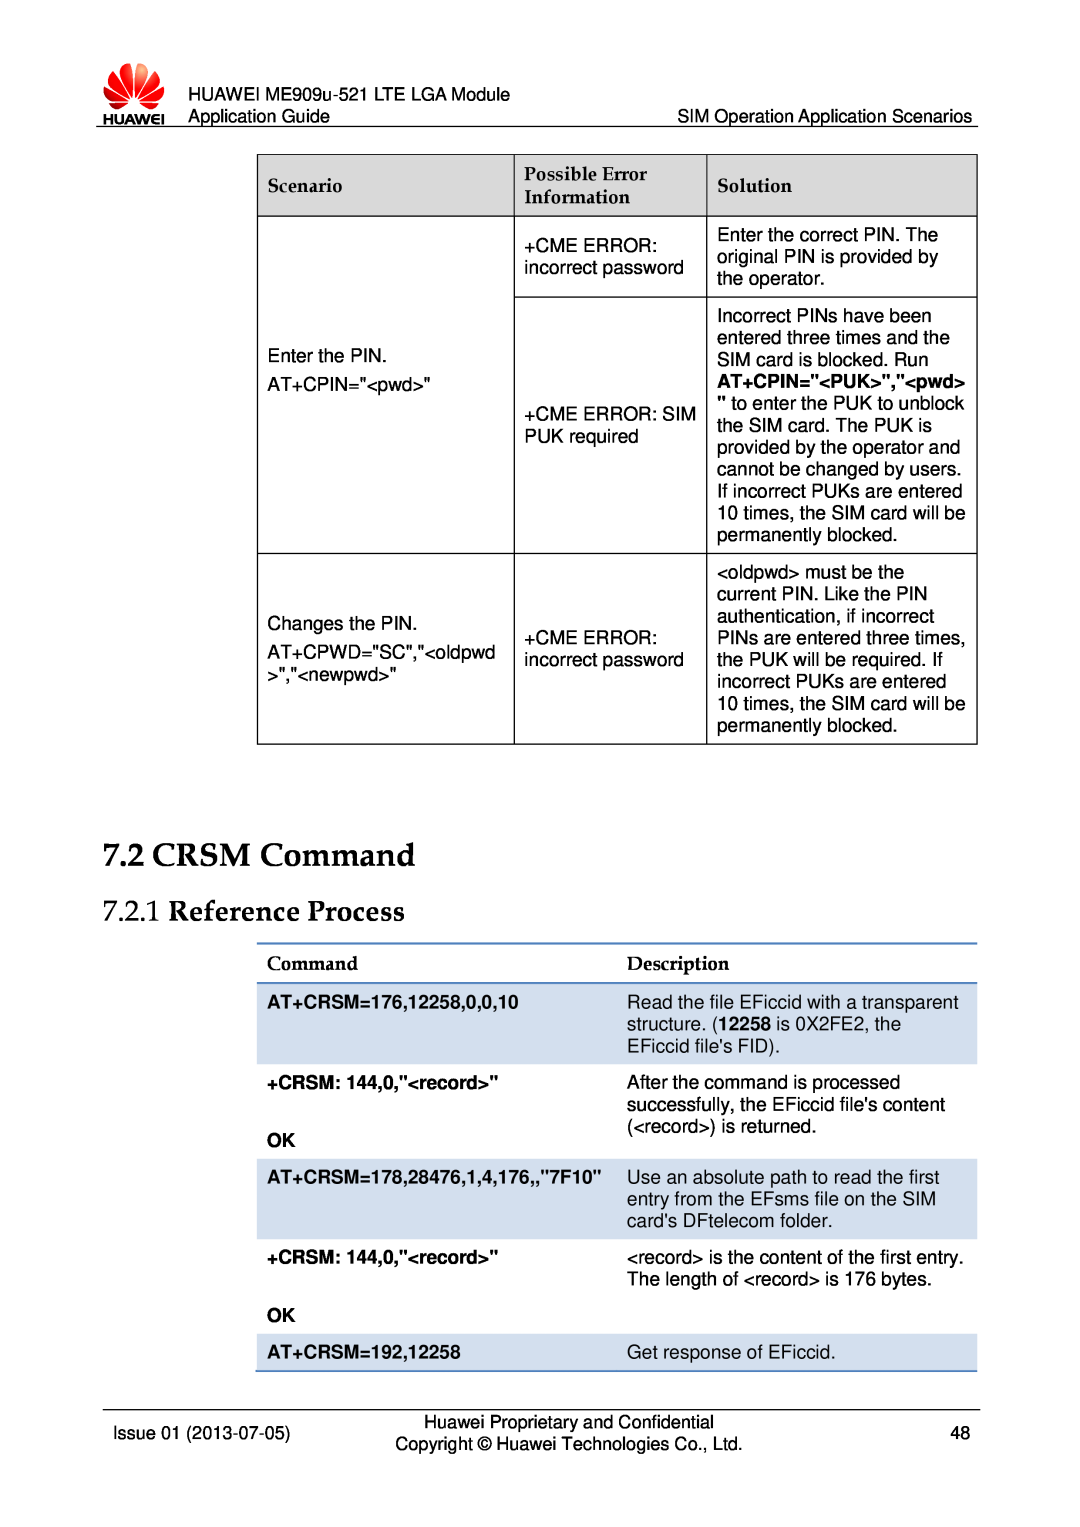 Huawei ME909u-521 manual CRSM Command, Reference Process 